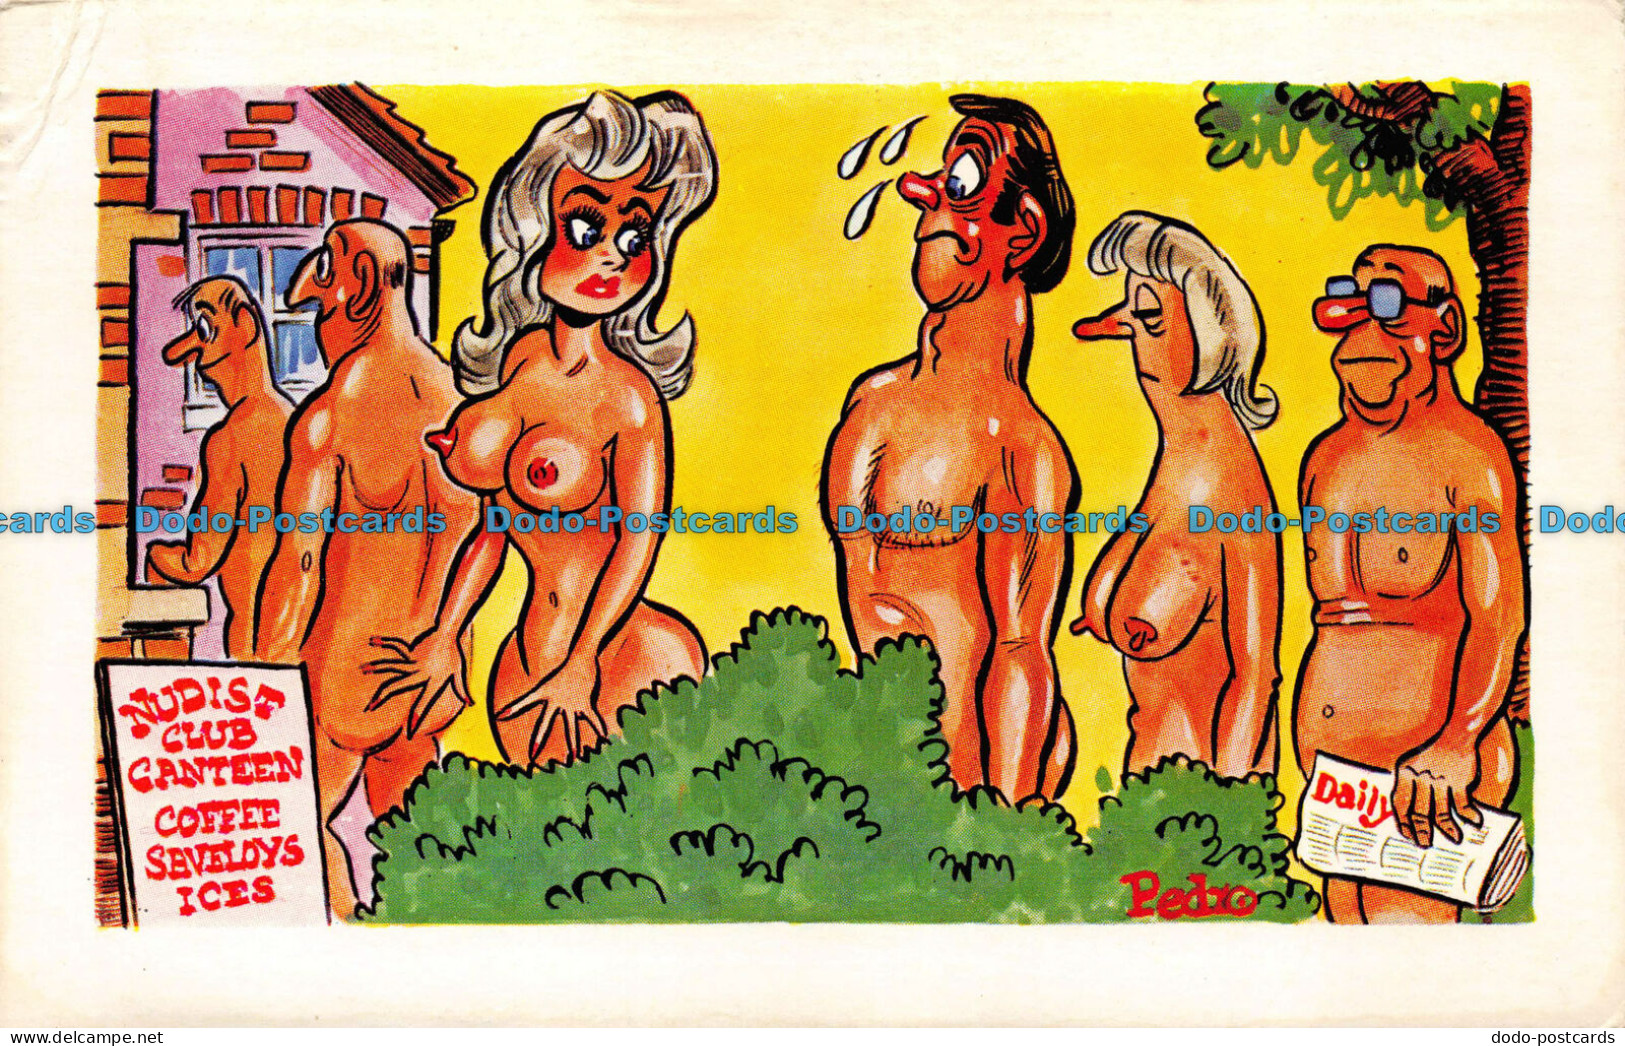 R081929 Nudist Club Canteen Coffee Seveloys Ices. Sunny Pedro Series. 179 - World